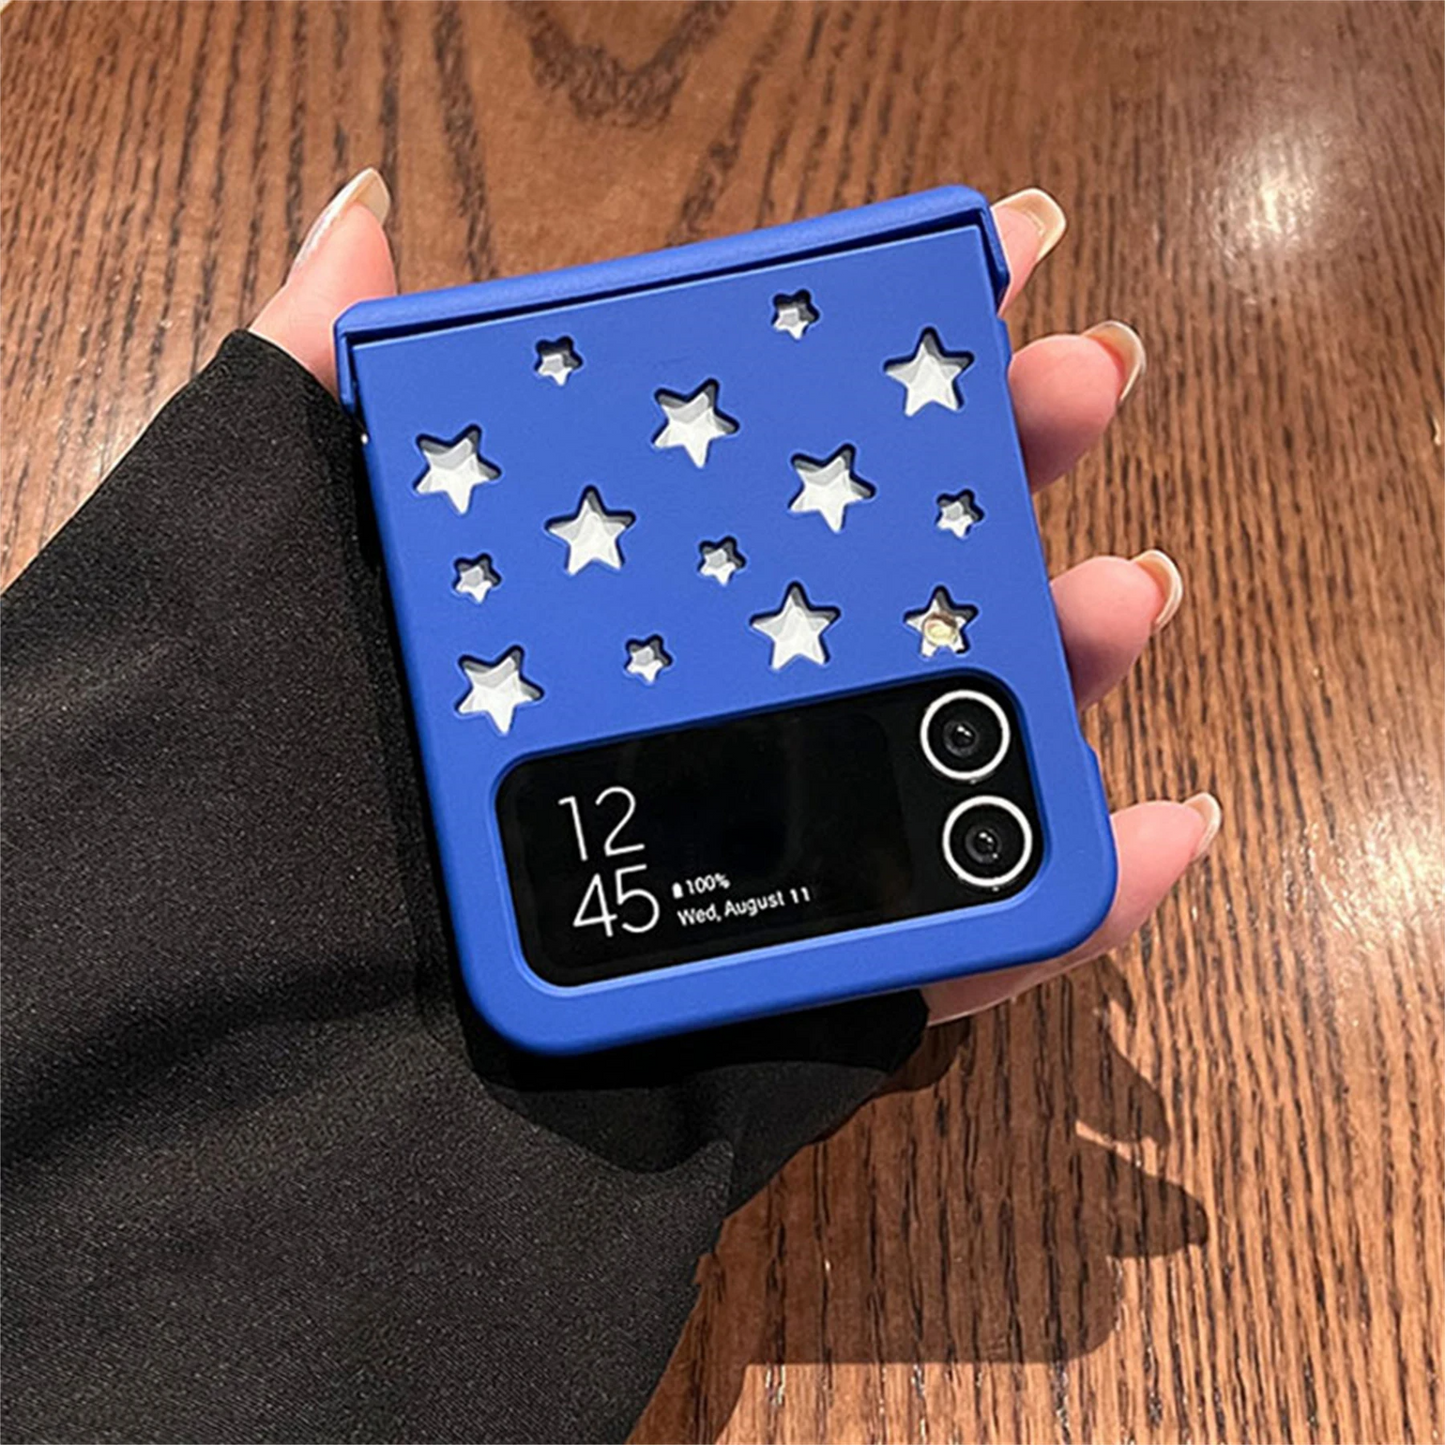 Star Shape Galaxy Z Flip Phone Case (10 Colours)